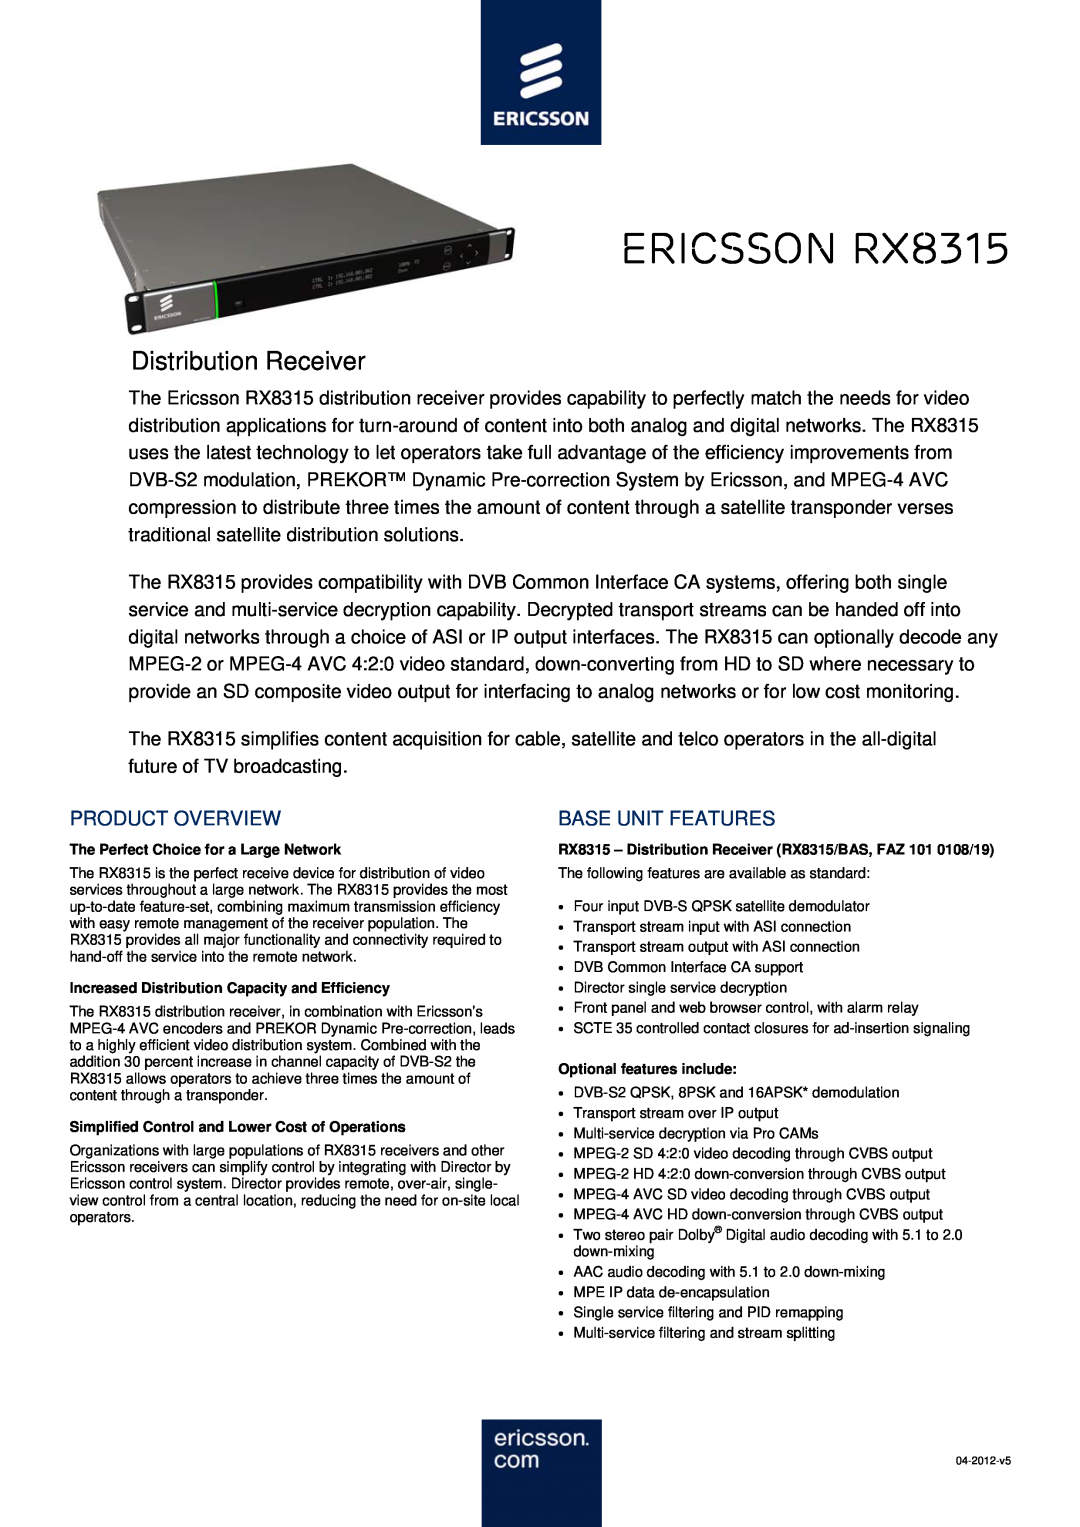 Ericsson manual Product Overview, Base Unit Features, Ericsson RX8315, Distribution Receiver 